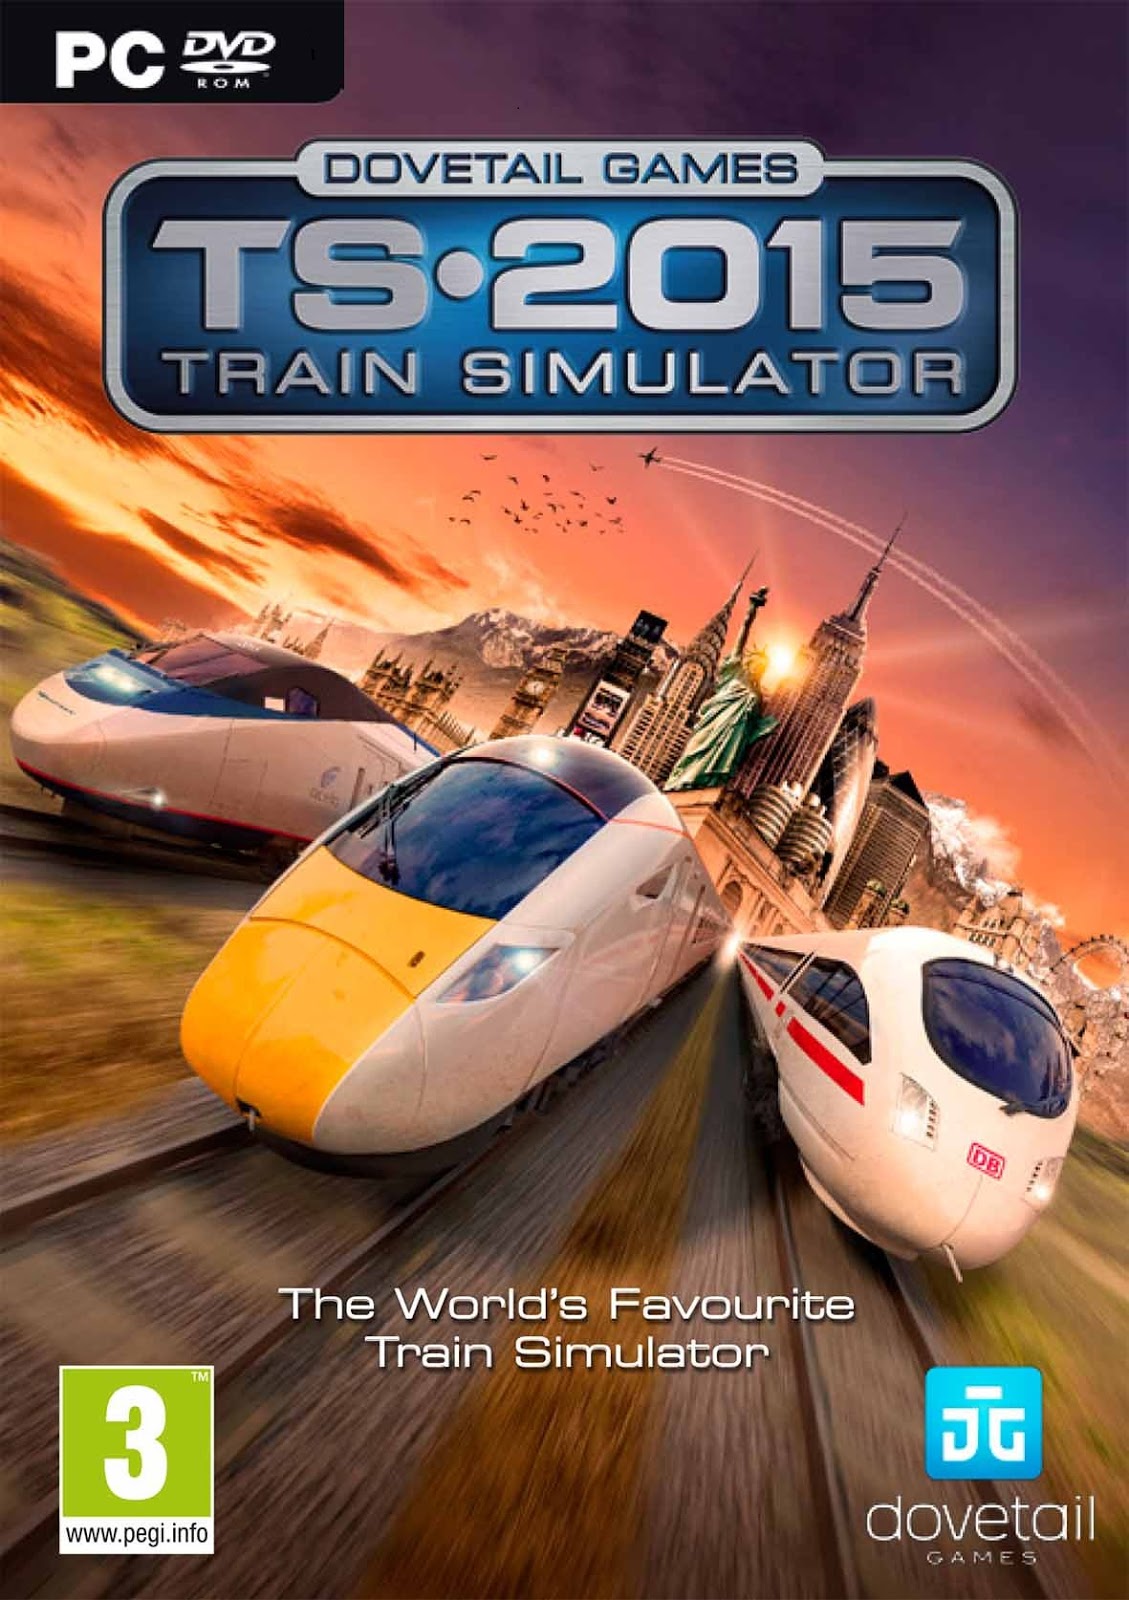 train simulator free download